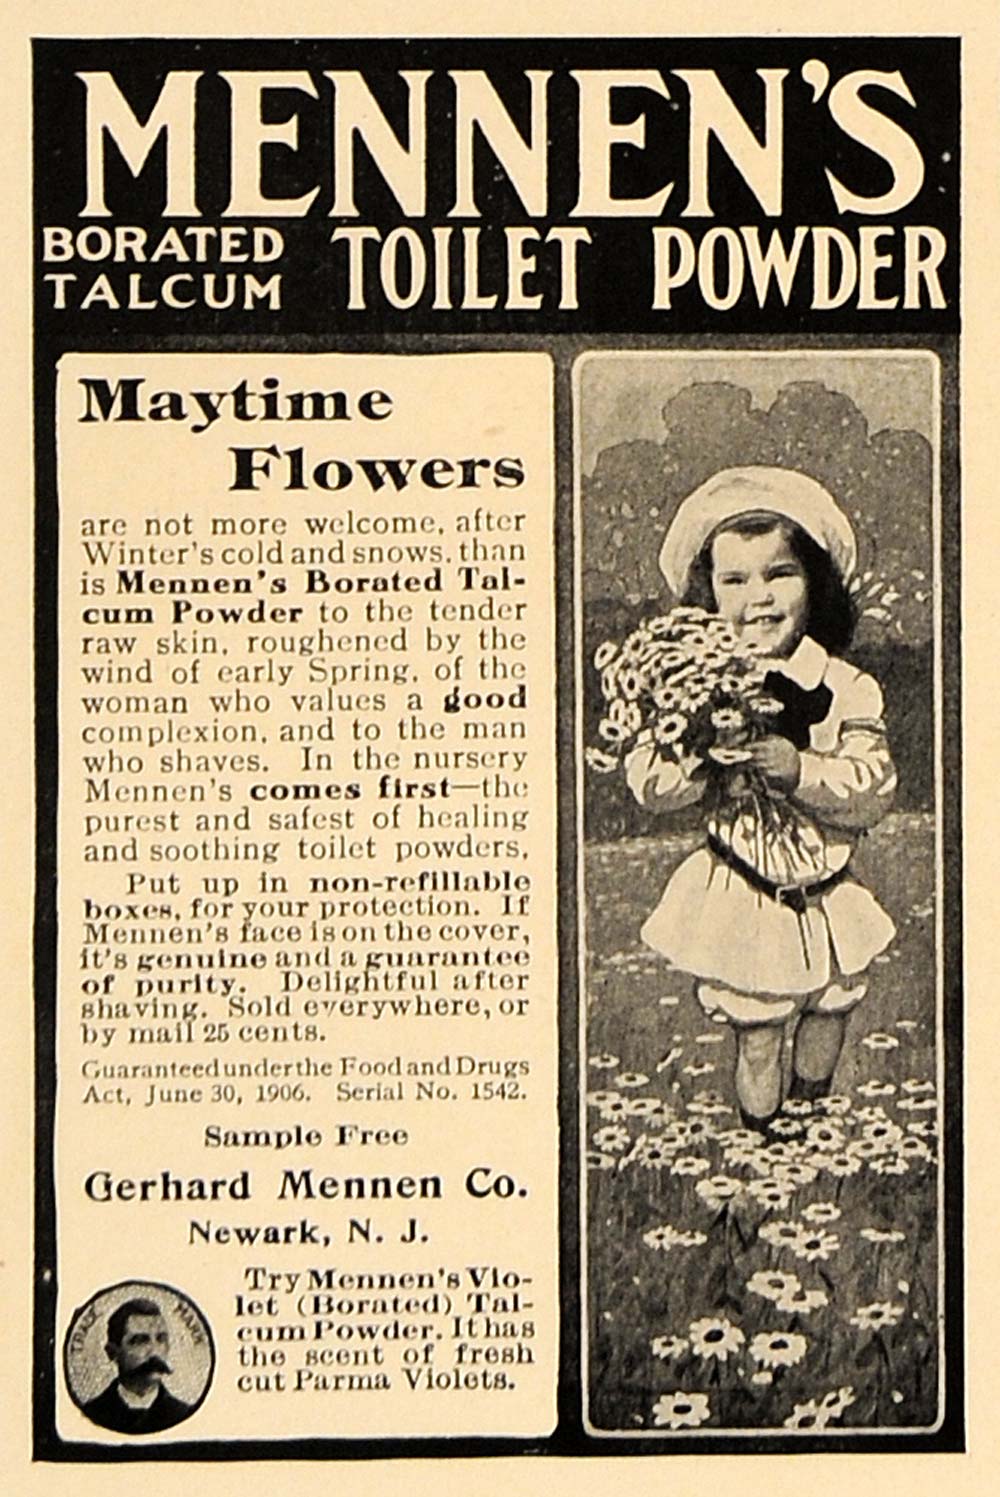 1907 Ad Gerhard Mennen's Borated Talcum Toilet Powder - ORIGINAL ADVERTISING CL4